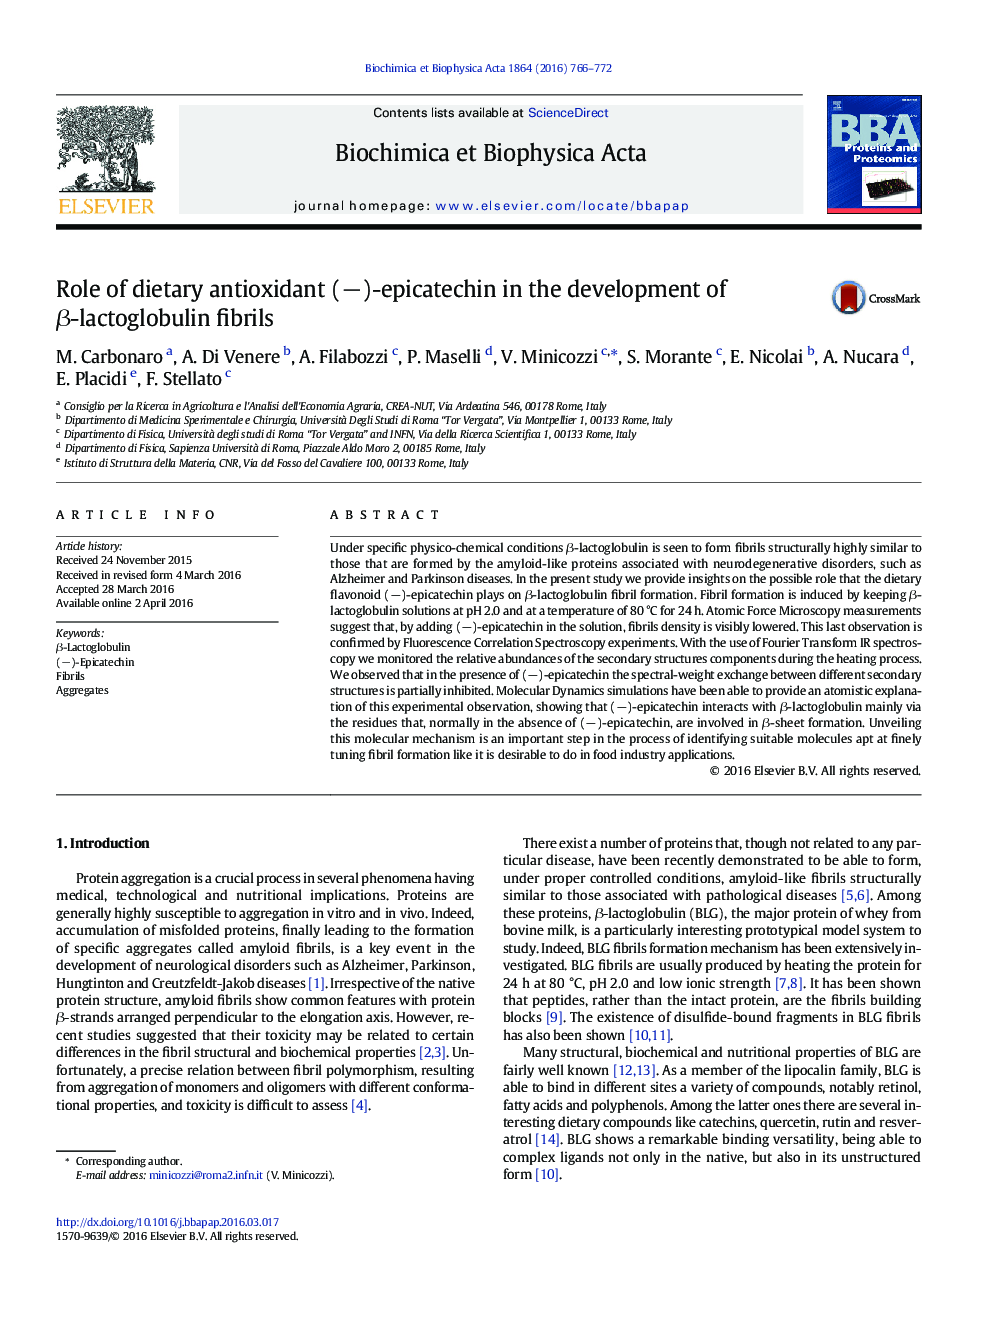 Role of dietary antioxidant (−)-epicatechin in the development of β-lactoglobulin fibrils